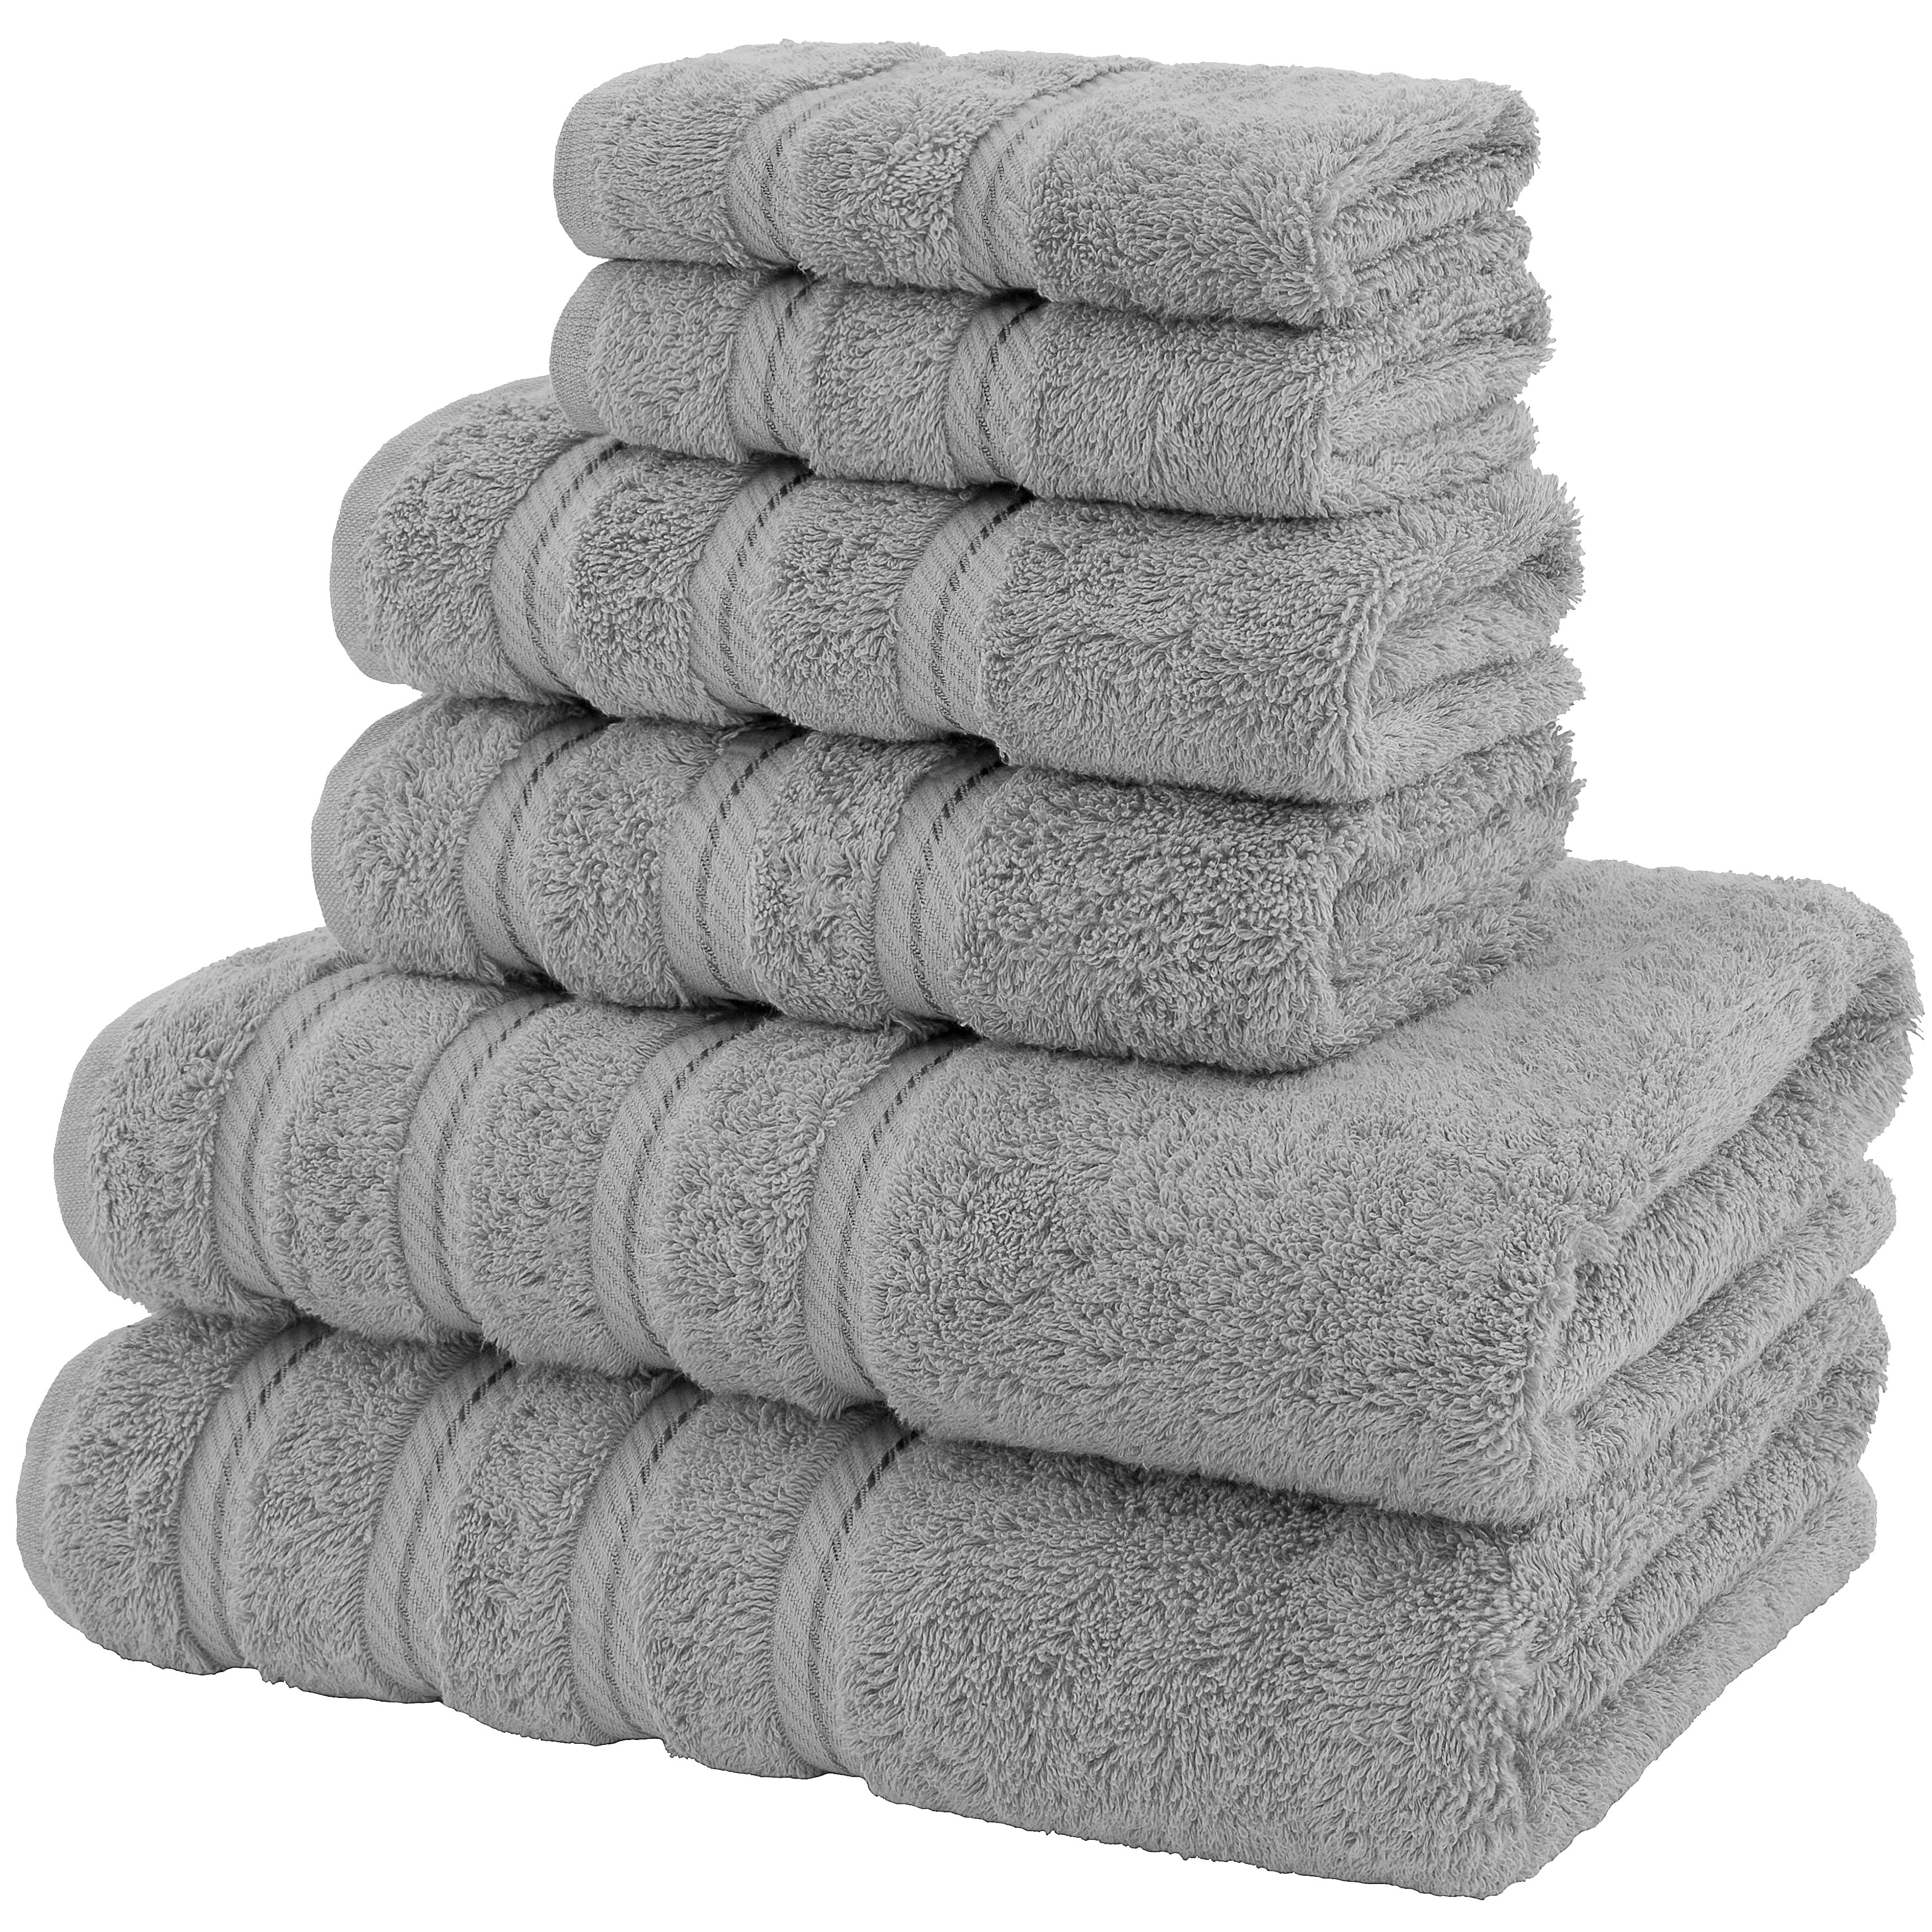 TEXTILOM 100% Turkish Cotton 2 Pcs Bath Towel Set, Luxury Bath Towels for  Bathroom, Soft & Absorbent Hotel Quality Bathroom Towels Set (27 x 54  inches)- Lilac - Yahoo Shopping